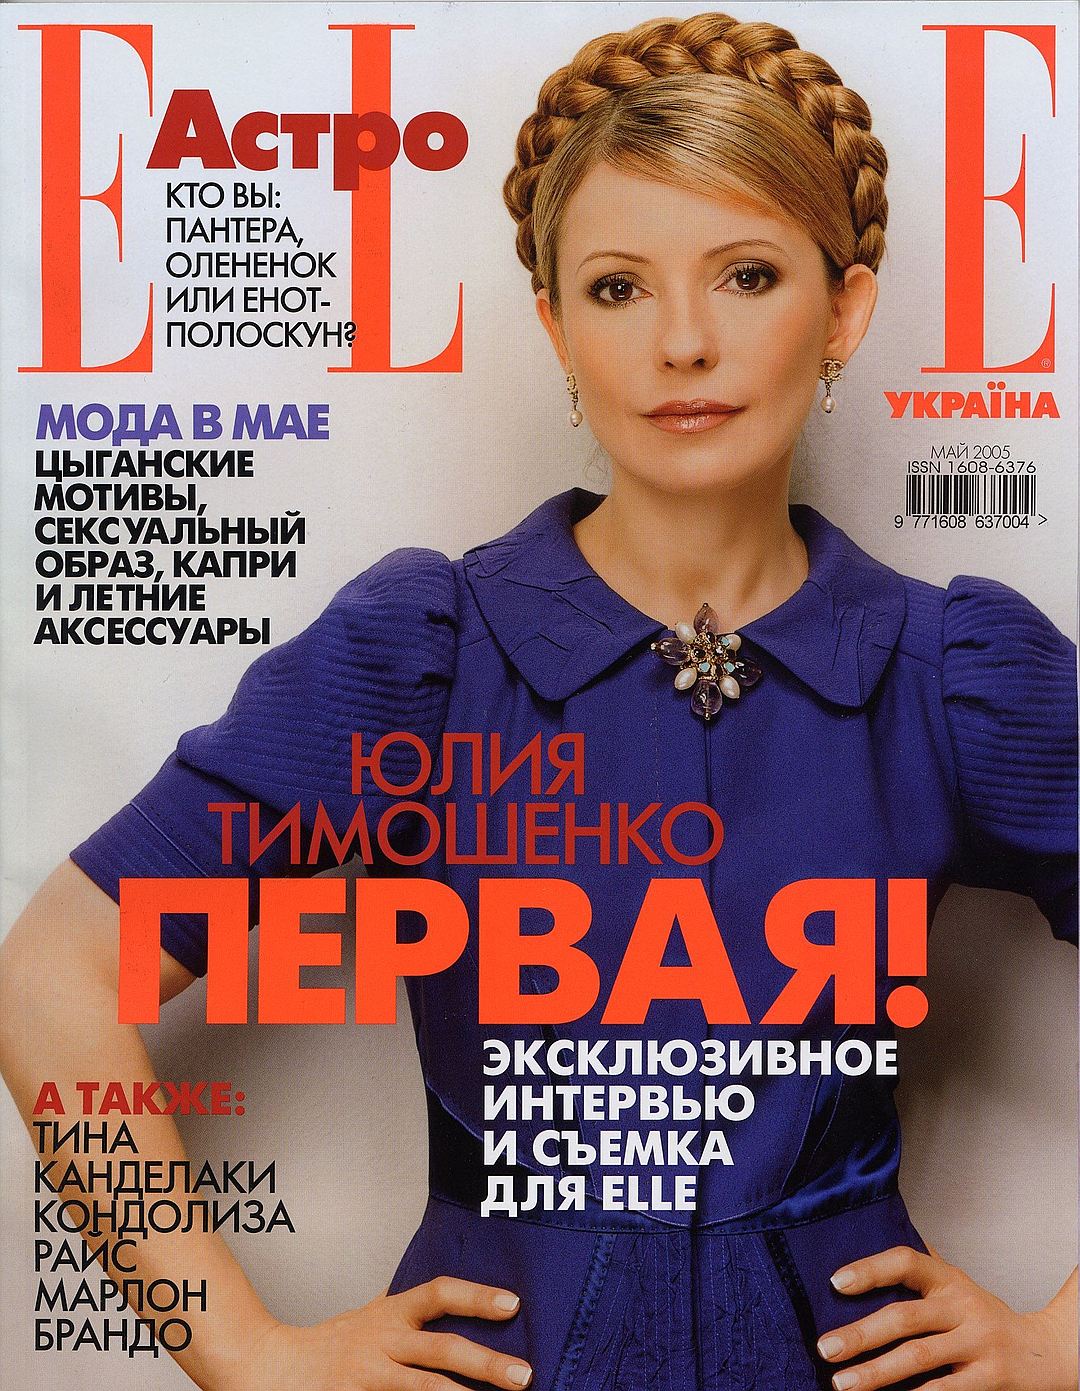 Обложка журнала Elle, май 2005